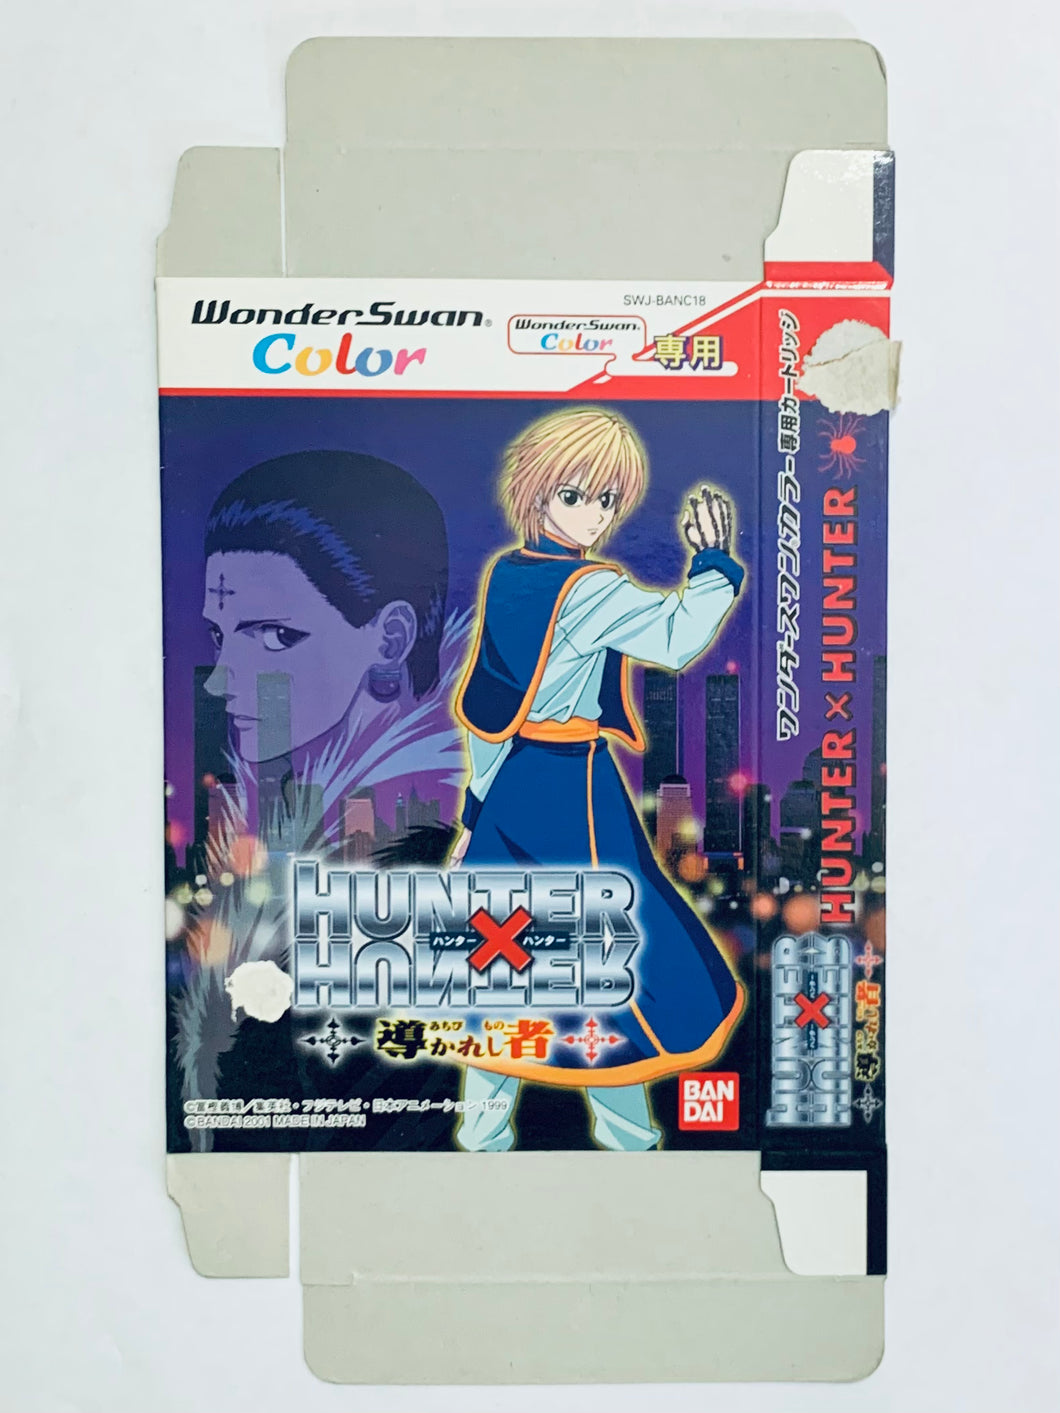 Hunter X Hunter: Michibi Kareshi Mono - WonderSwan Color - WSC - JP - Box Only (SWJ-BANC18)